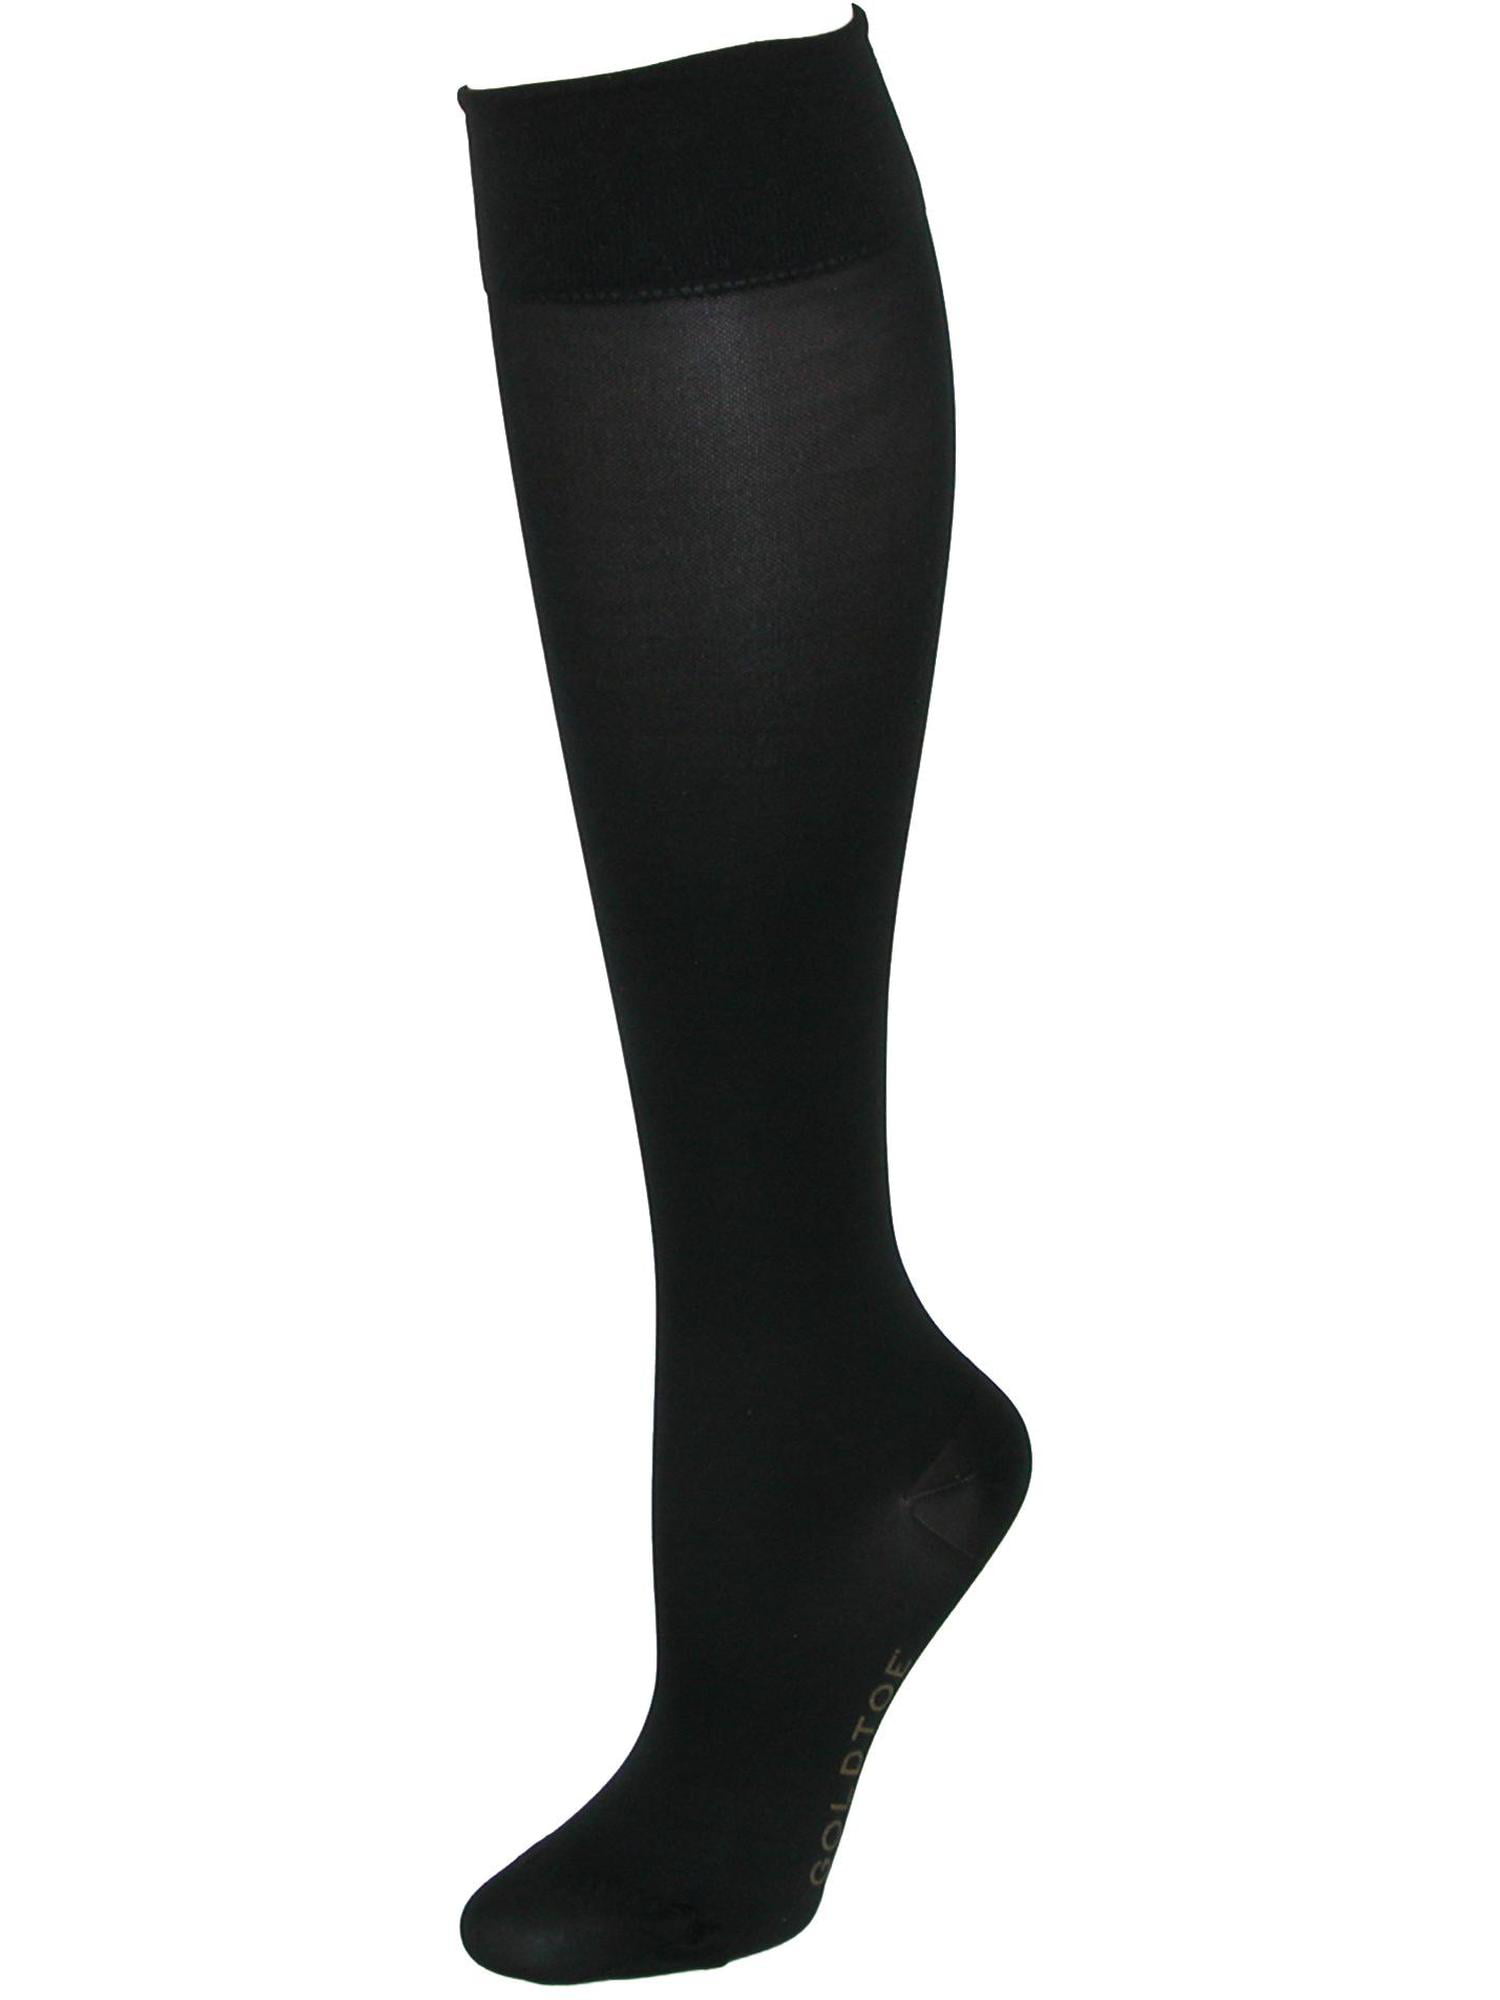 GOLDTOE - Gold Toe Firm Compression Knee High Socks (Women's) - Walmart ...